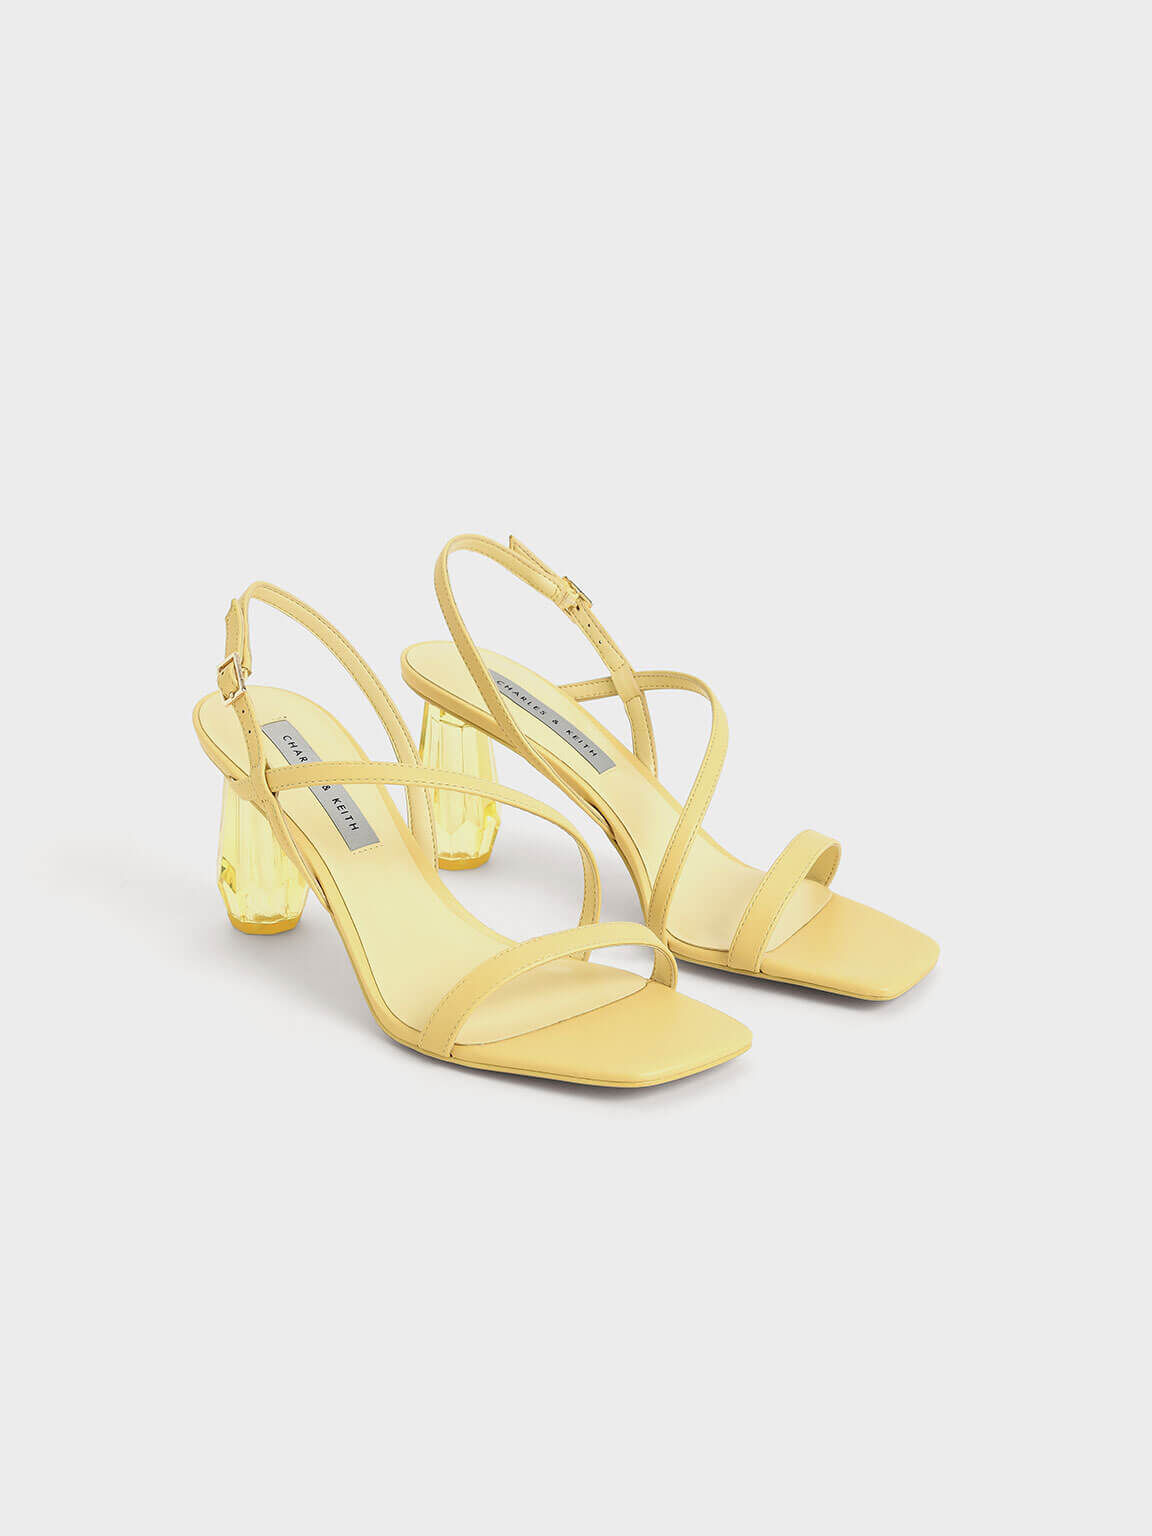 See-Through Sculptural Heel Sandals, Yellow, hi-res